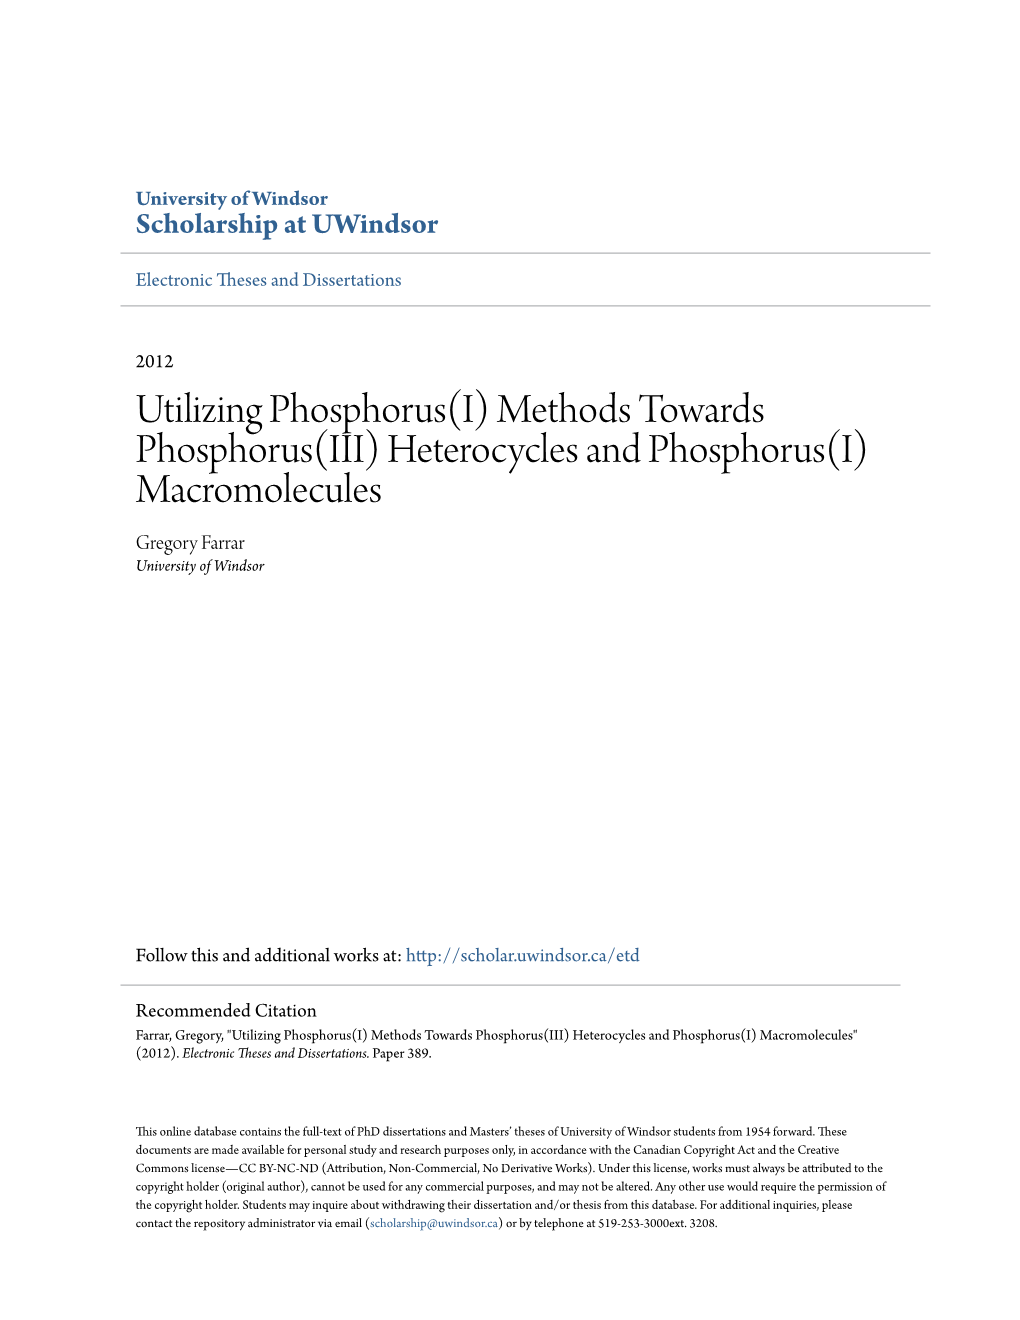 Utilizing Phosphorus(I) Methods Towards Phosphorus(III) Heterocycles and Phosphorus(I) Macromolecules Gregory Farrar University of Windsor